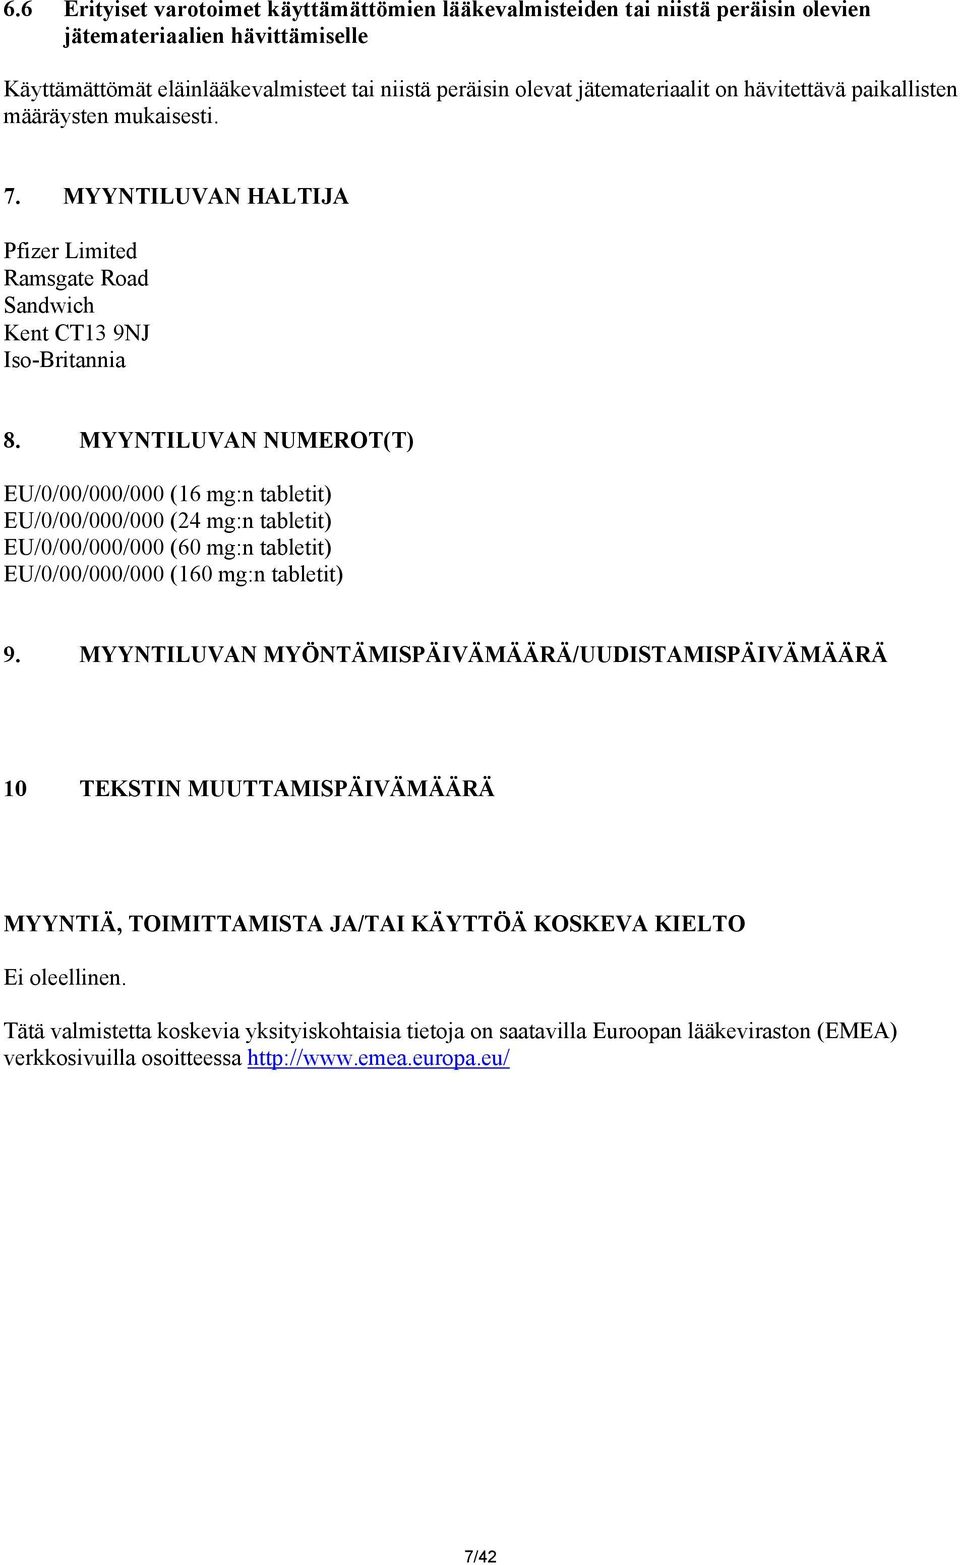 MYYNTILUVAN NUMEROT(T) EU/0/00/000/000 (16 mg:n tabletit) EU/0/00/000/000 (24 mg:n tabletit) EU/0/00/000/000 (60 mg:n tabletit) EU/0/00/000/000 (160 mg:n tabletit) 9.